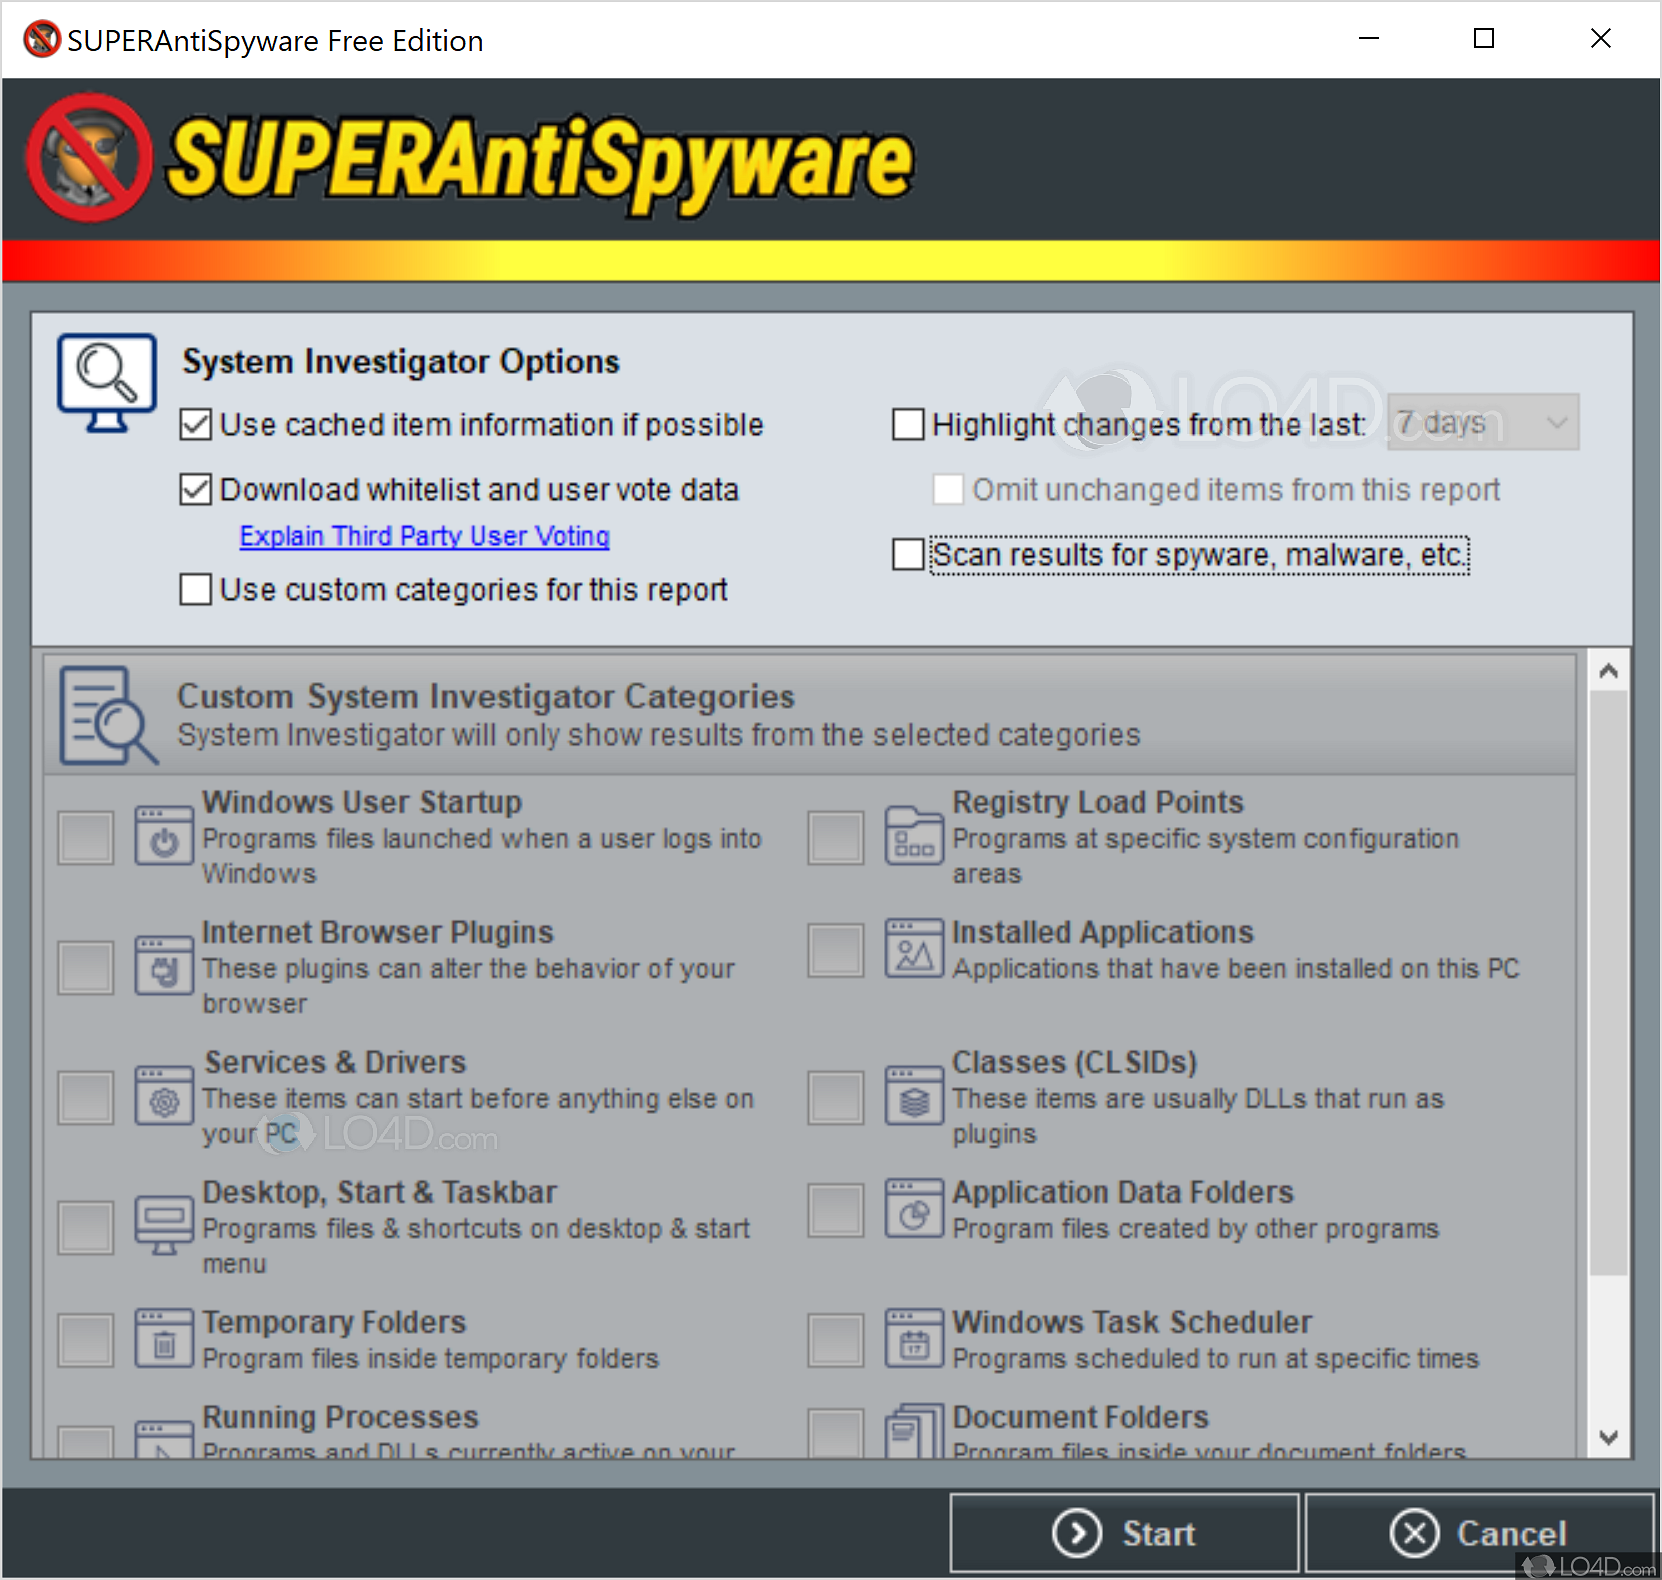 download the last version for mac SuperAntiSpyware Professional X 10.0.1254